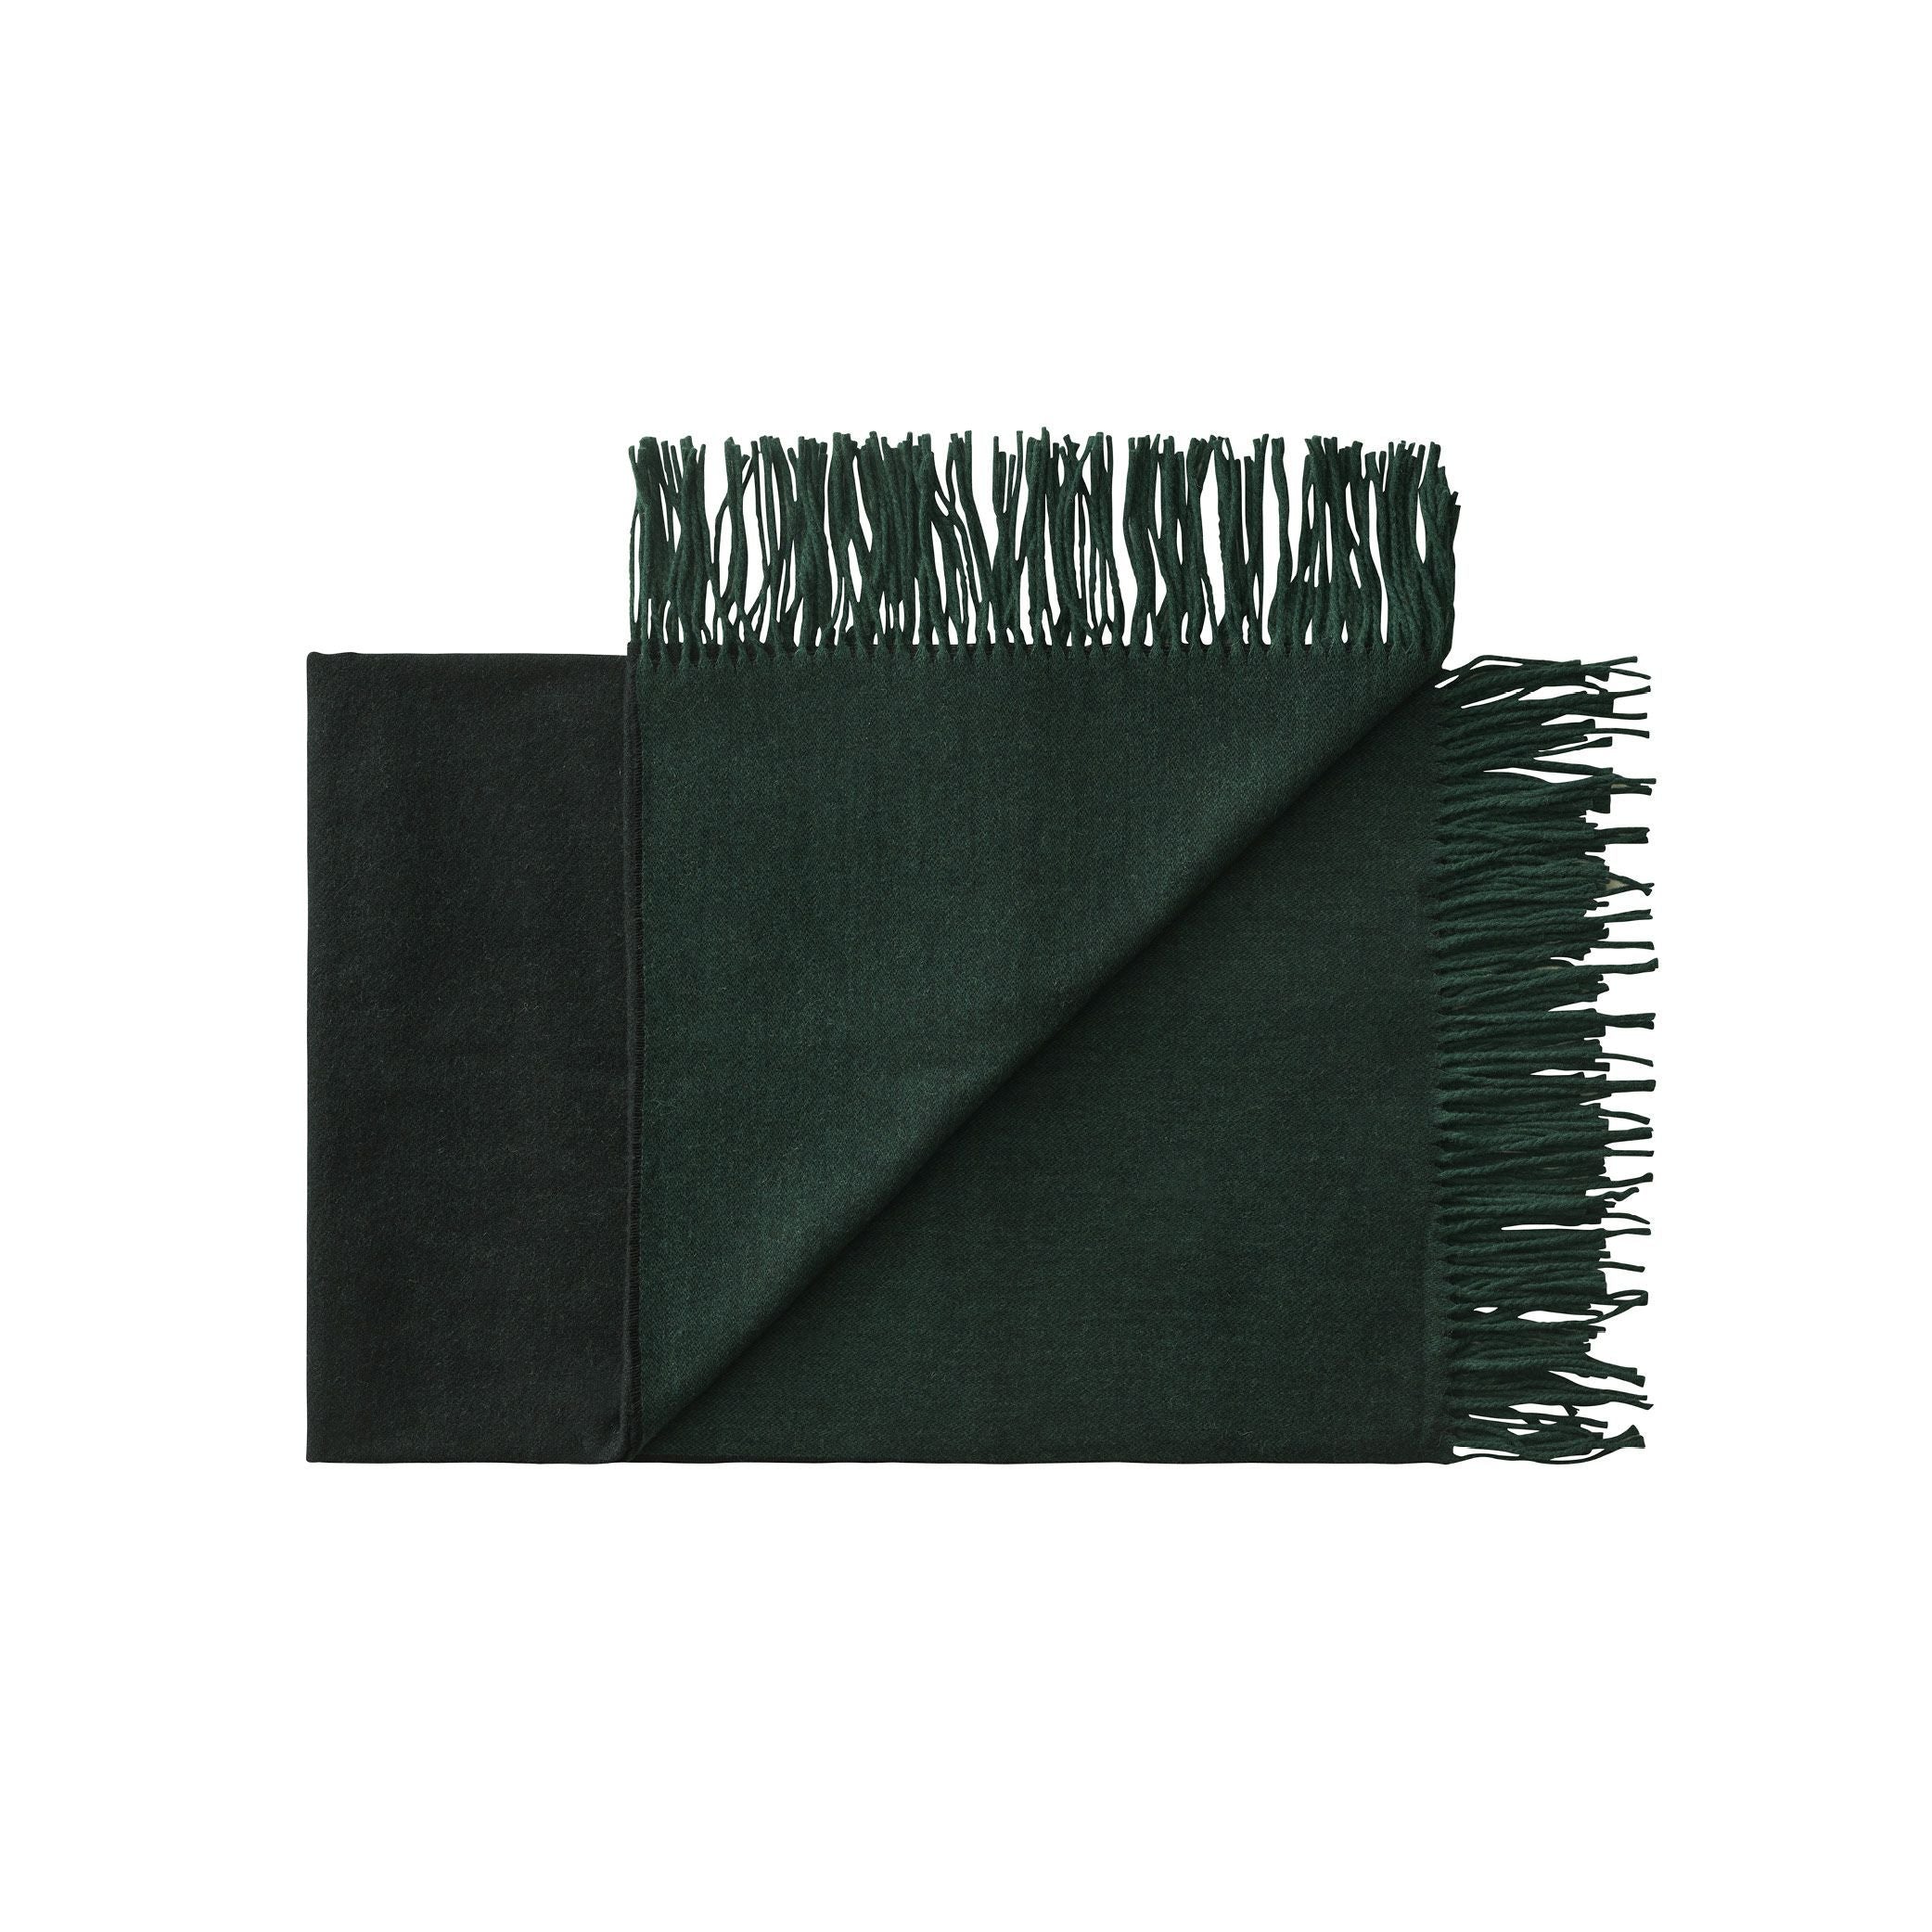 Silkeborg Woolspinderi franja rzut 170x140 cm, zielony/czarny